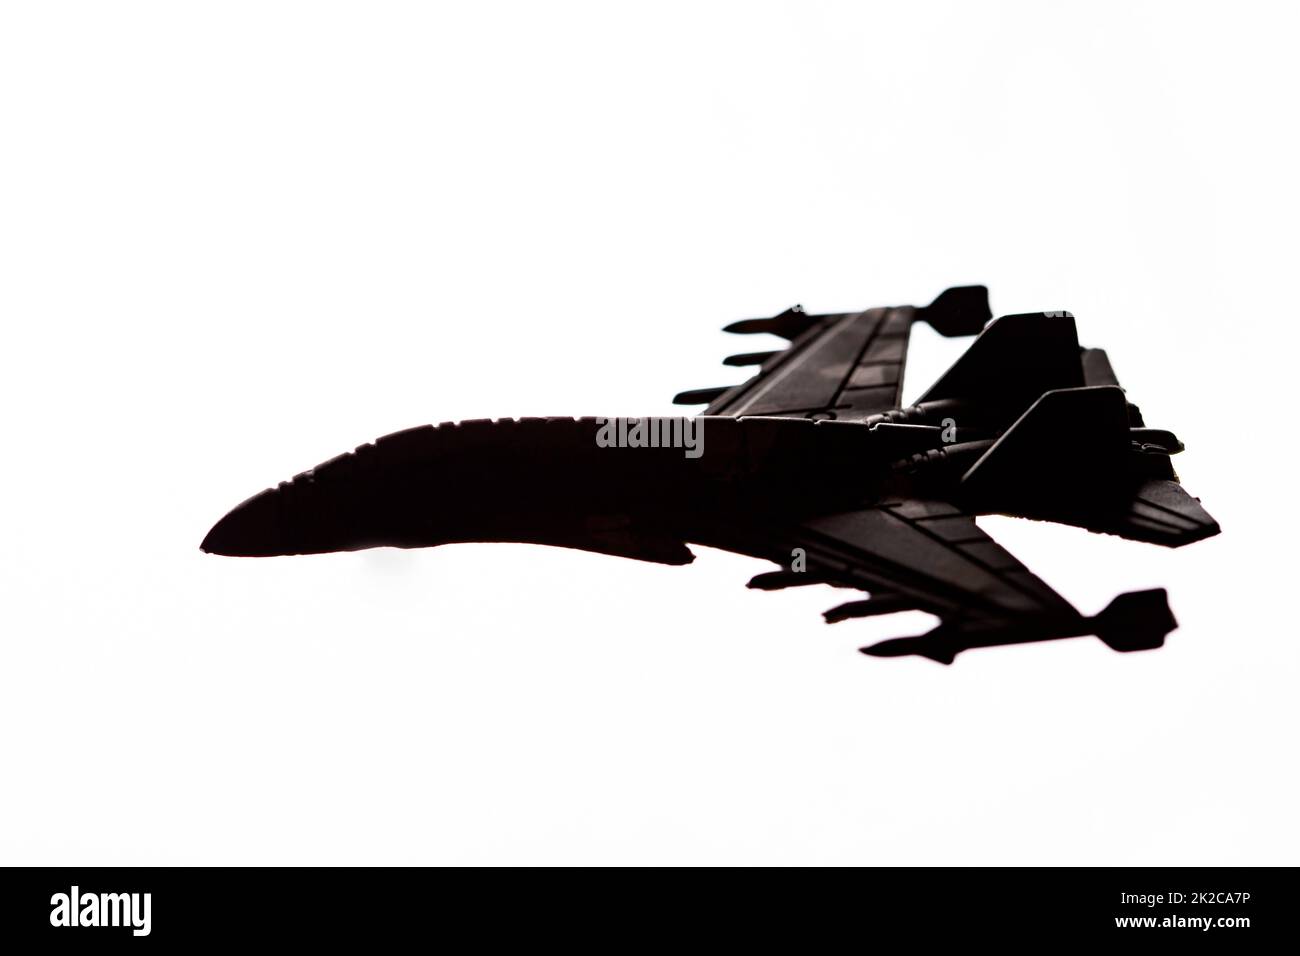 Military aircraft silhouette on white Stock Photo